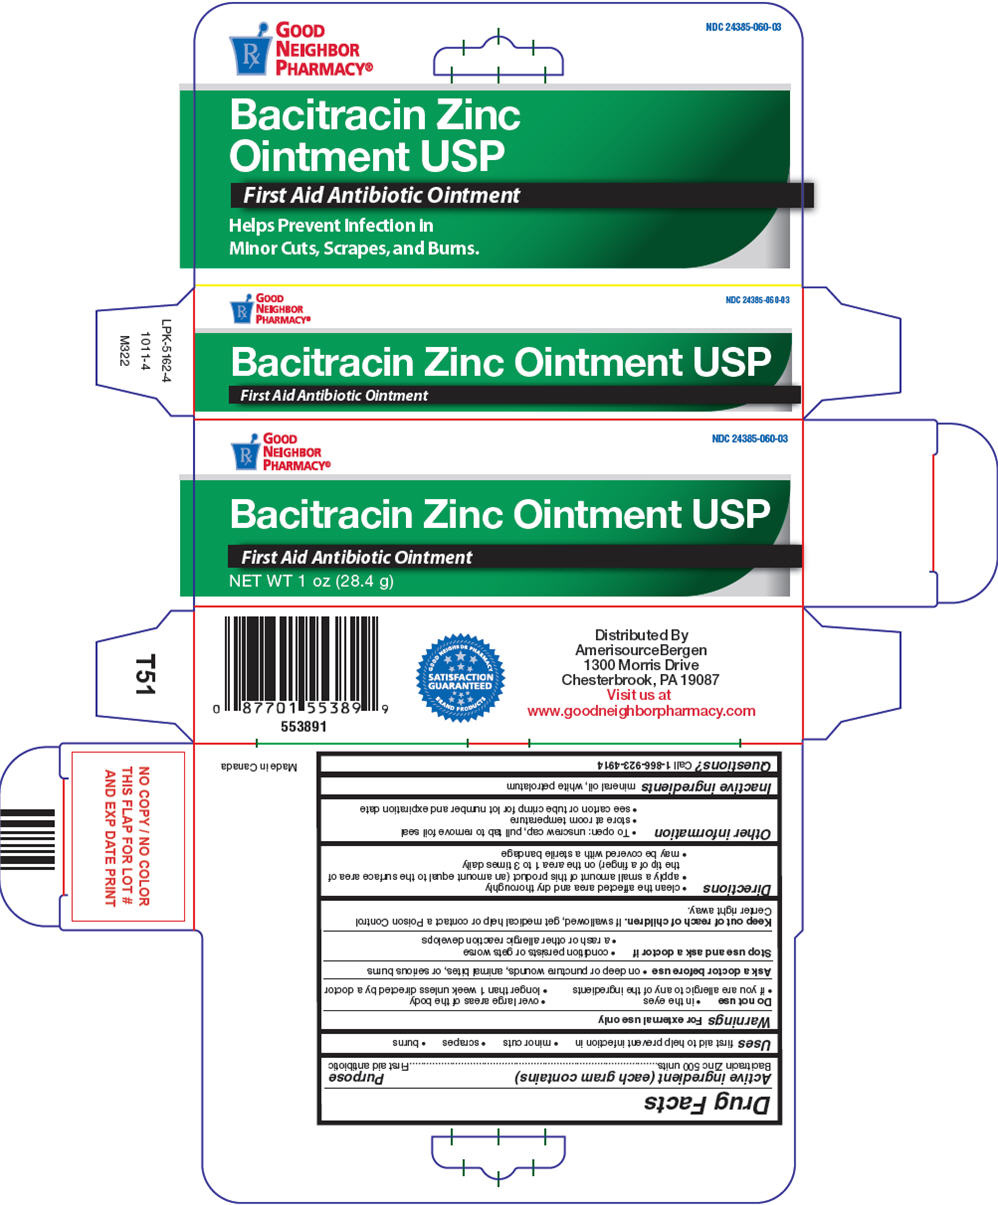 Good Neighbor Pharmacy Bacitracin Zinc (Bacitracin Zinc) Ointment [Amerisourcebergen]